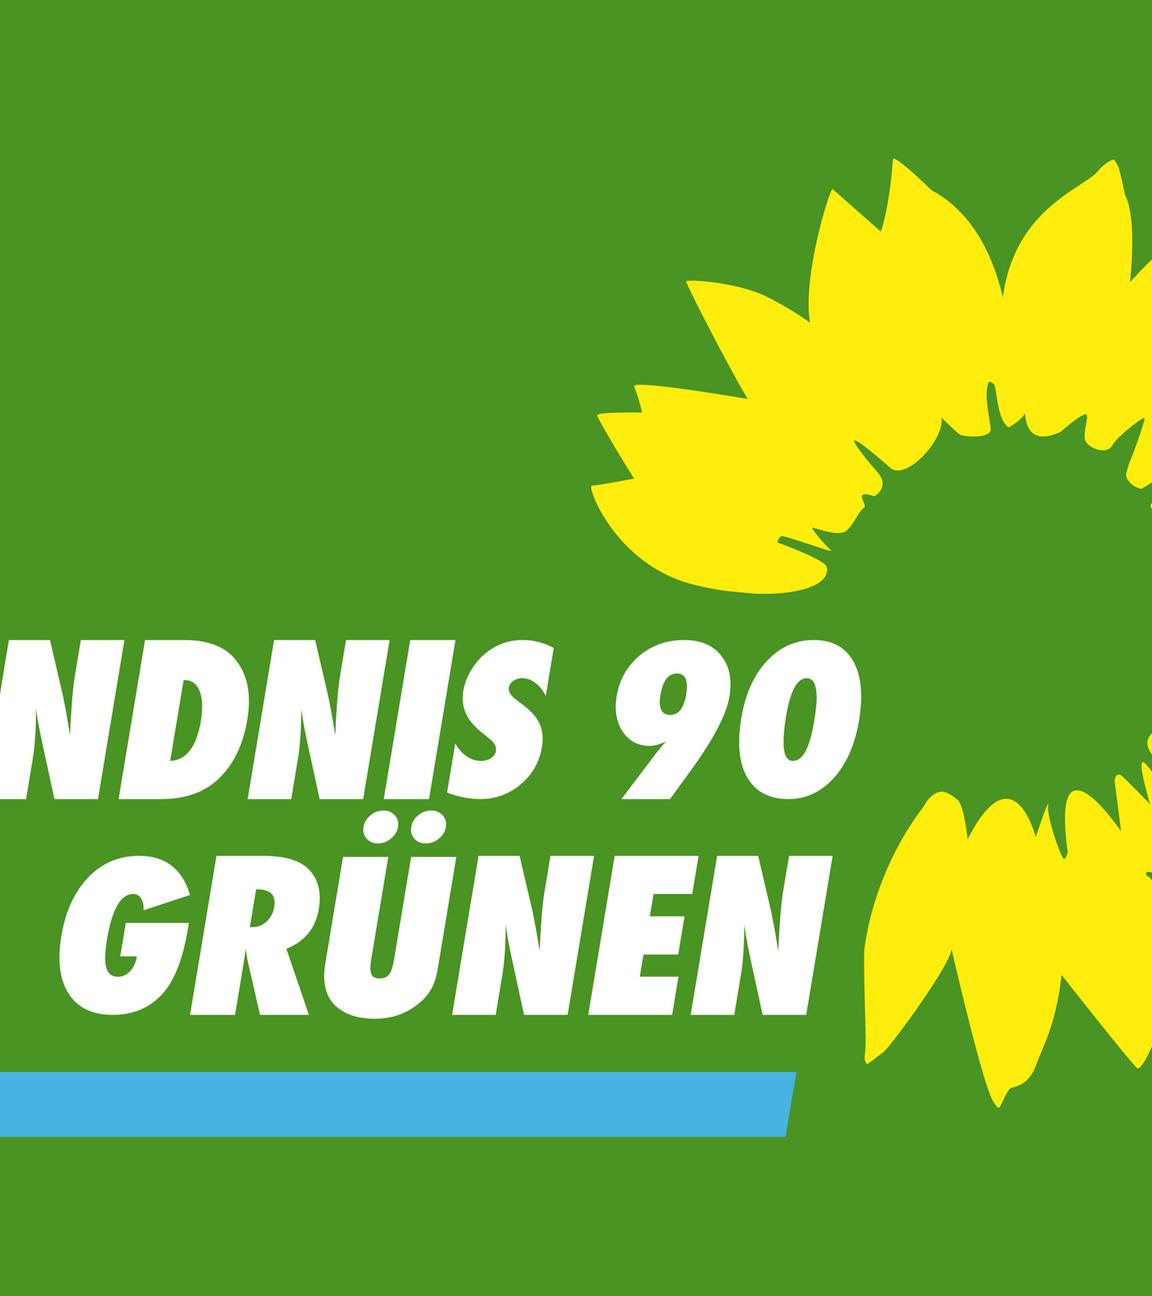 Bündnis 90 die Grünen logo